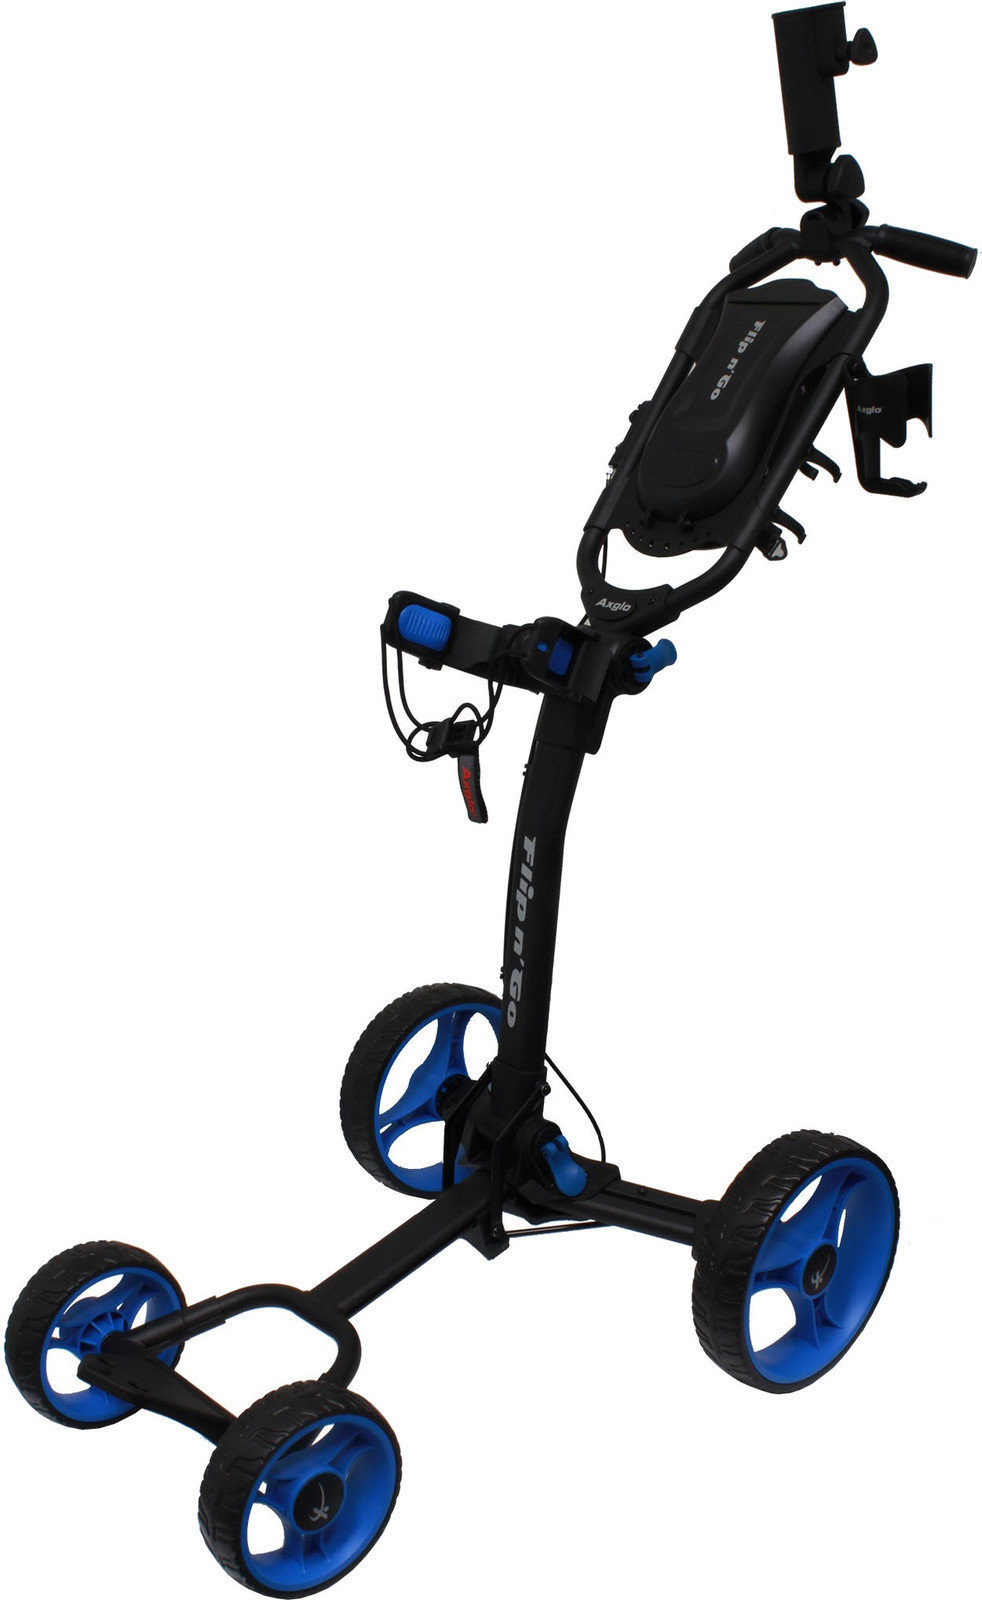 Manuální golfové vozíky Axglo Flip n Go Manuální golfové vozíky